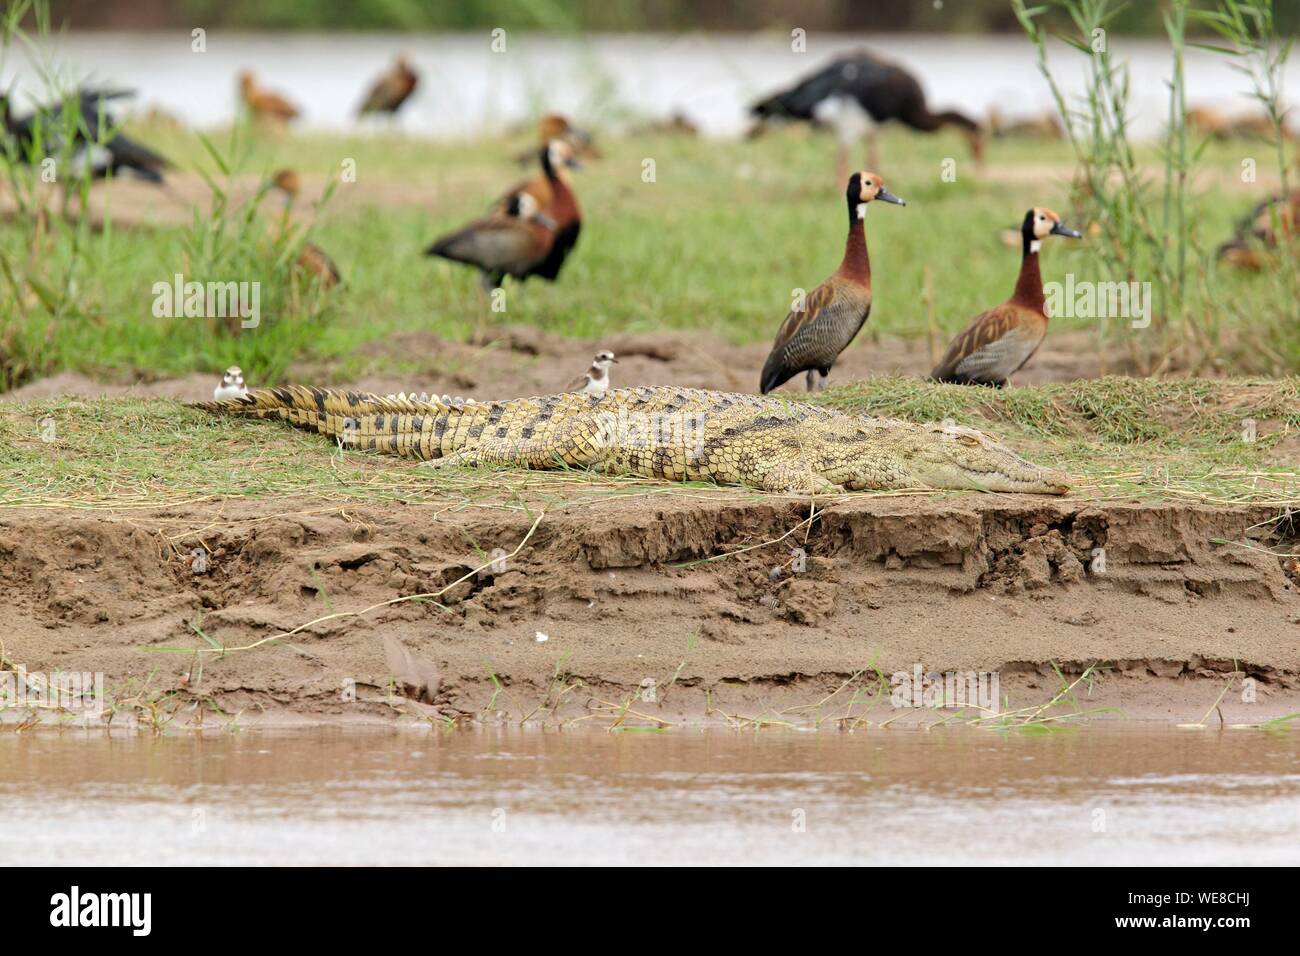 Burundi, Rusizi National Park, Nile Crocodile (Crocodylus niloticus), White-faced Whistling Duck (Dendrocygna viduata) Stock Photo